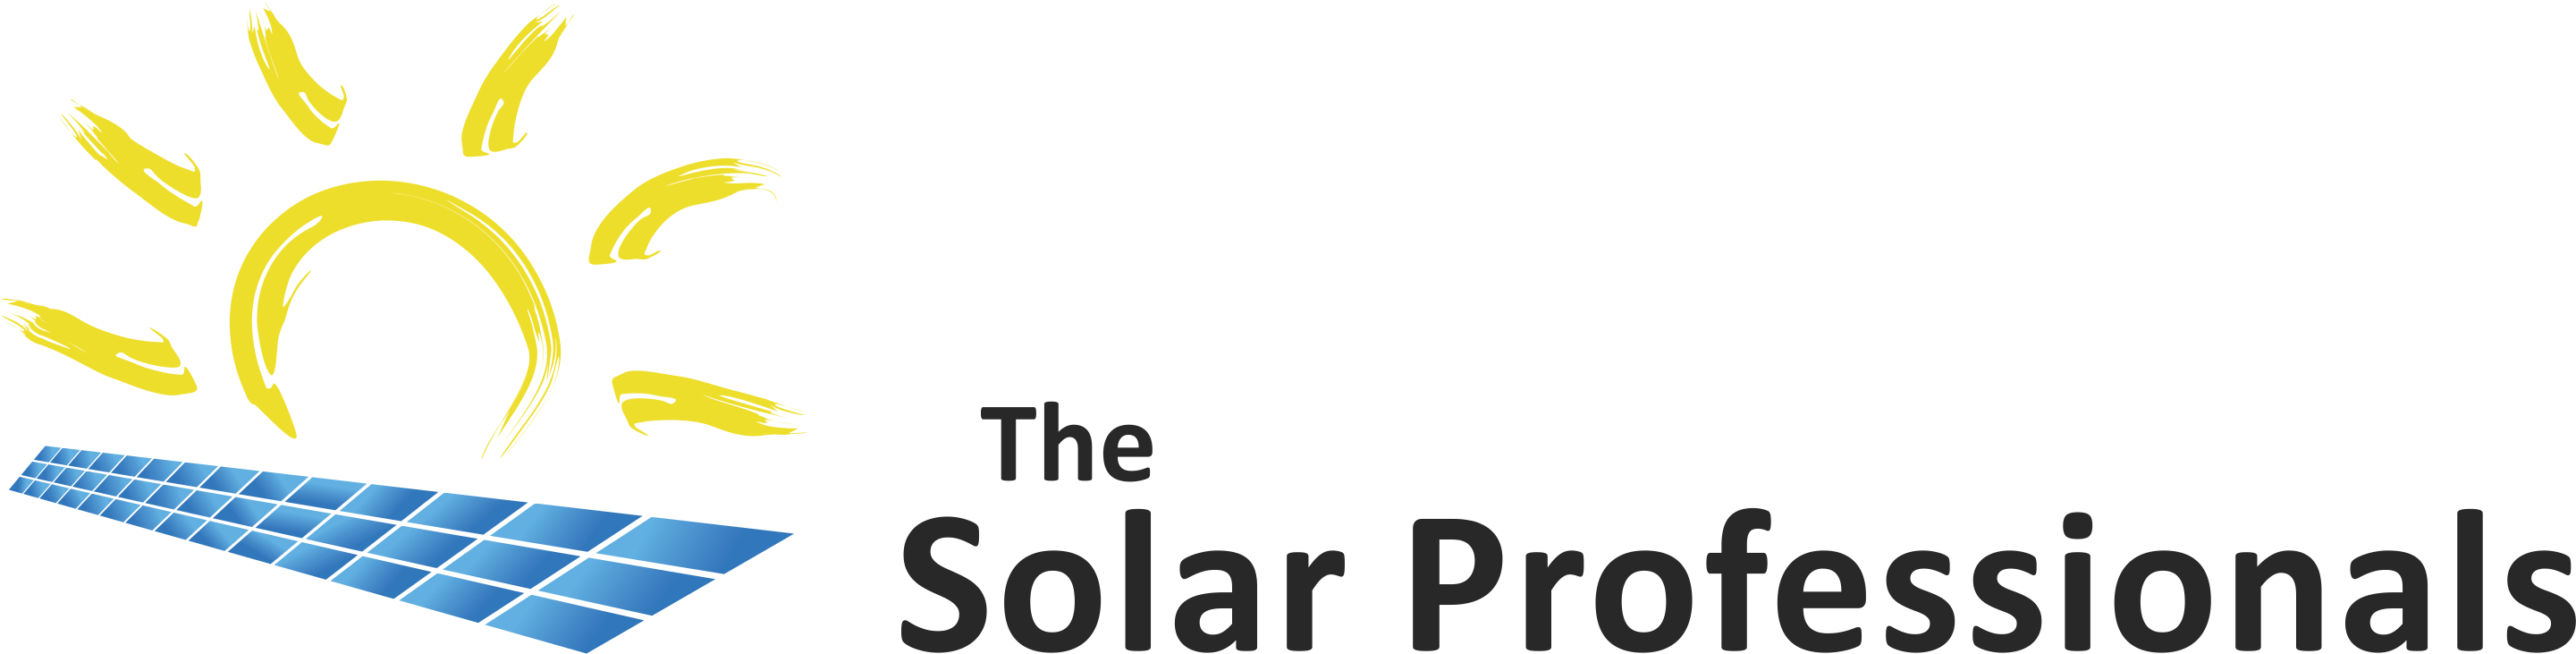 The Solar Professionals